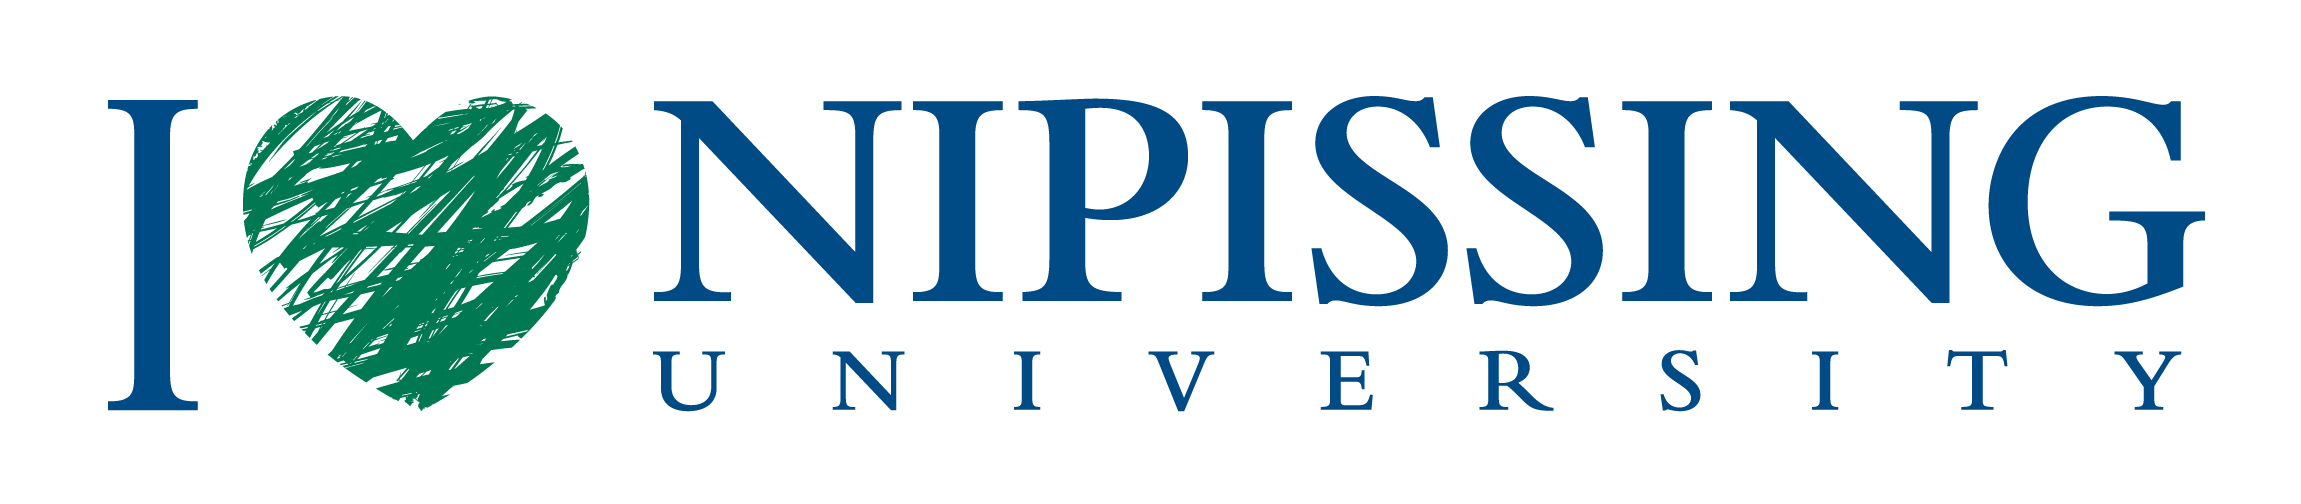 Photo of I Heart Nipissing University logo